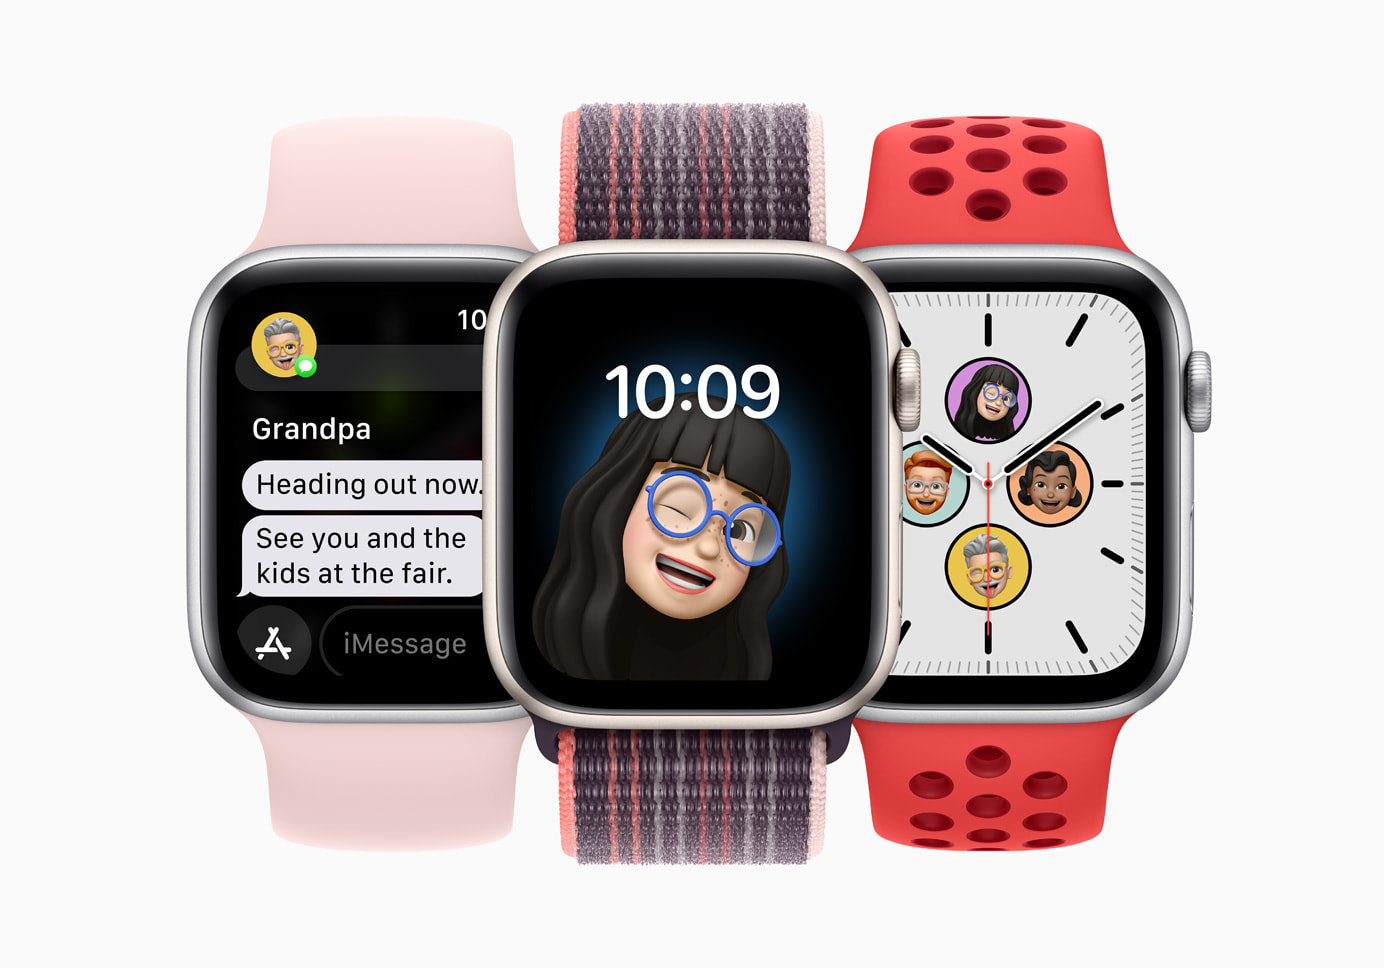 Apple-Watch-Family-Setup-220907_big.jpg.medium_2x